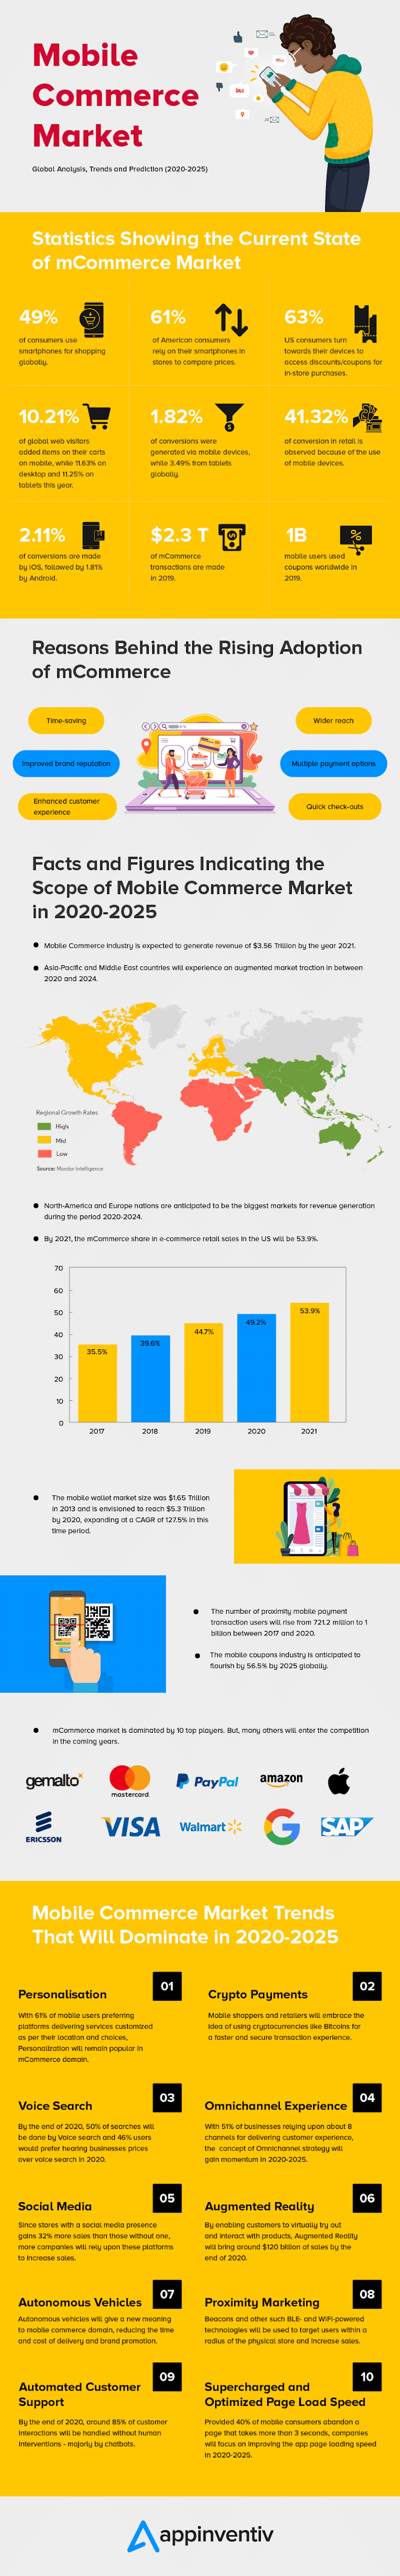 mobile marketing - mobile commerce statistics 2020